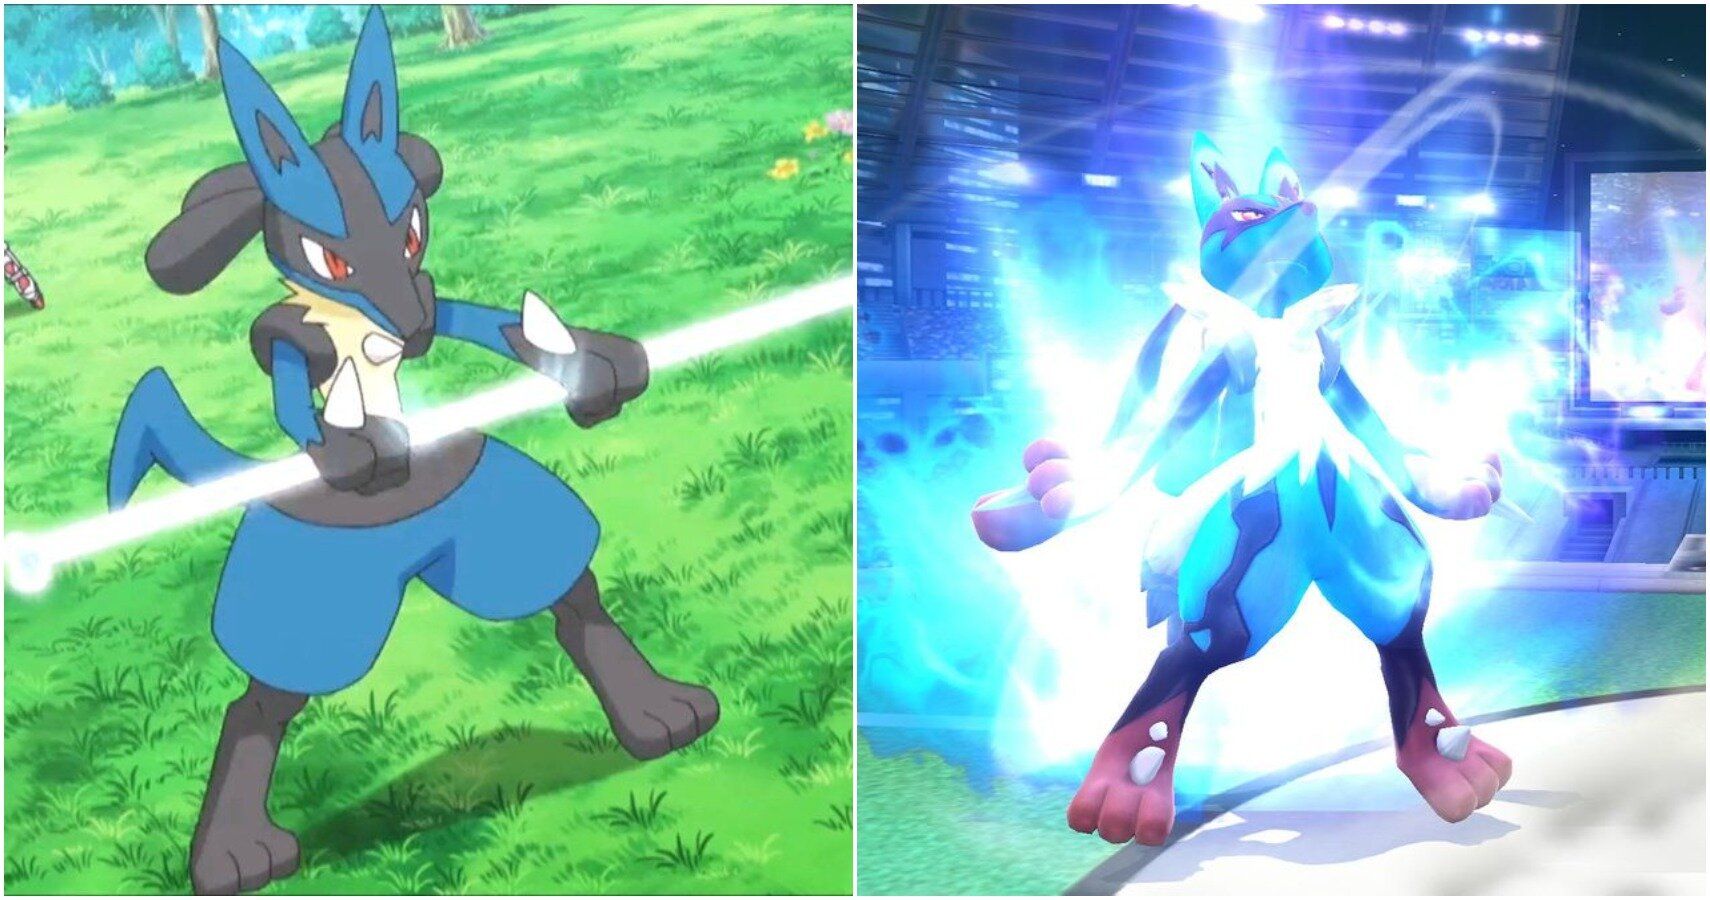 split image of anime lucario and mega evolution lucario